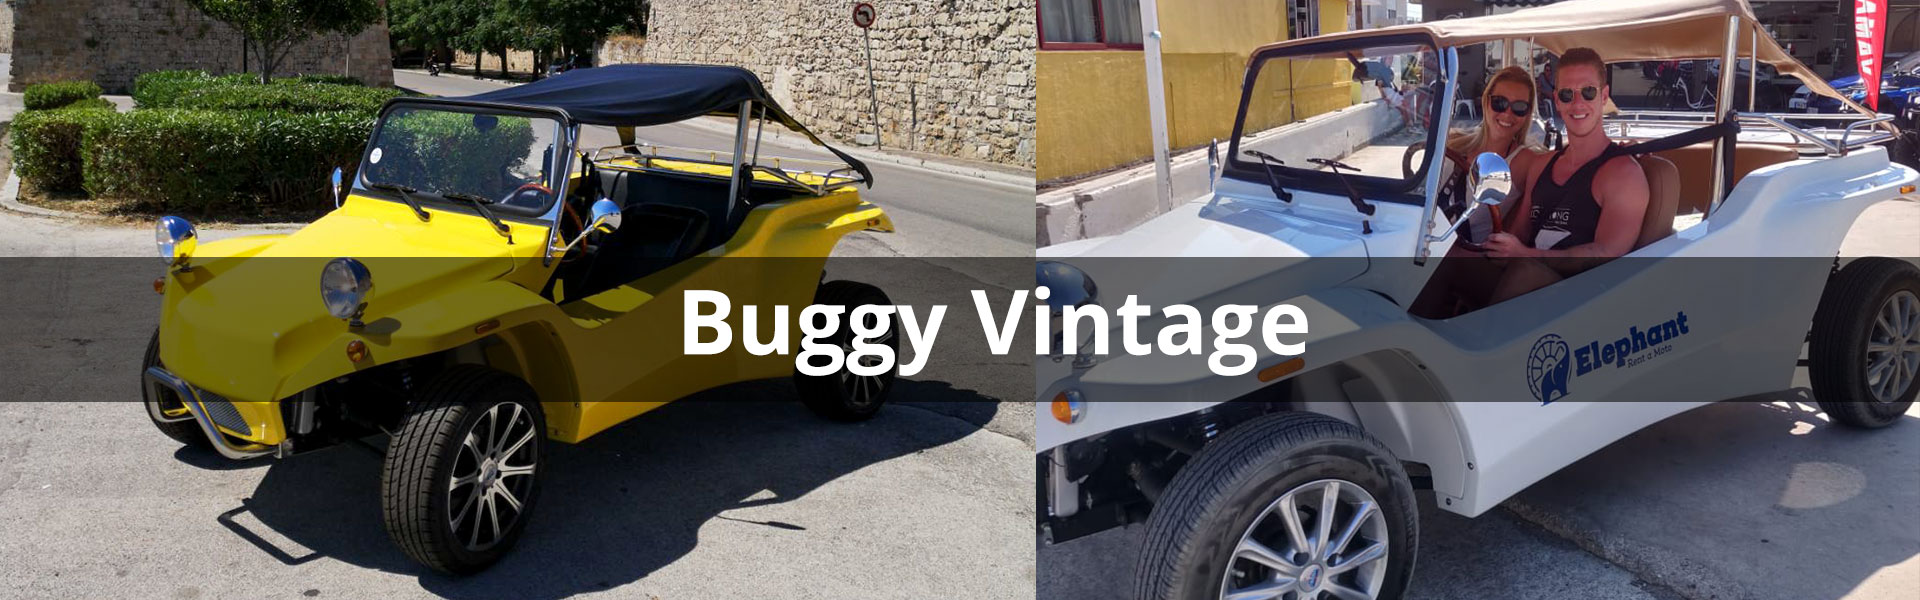 buggy-vintage